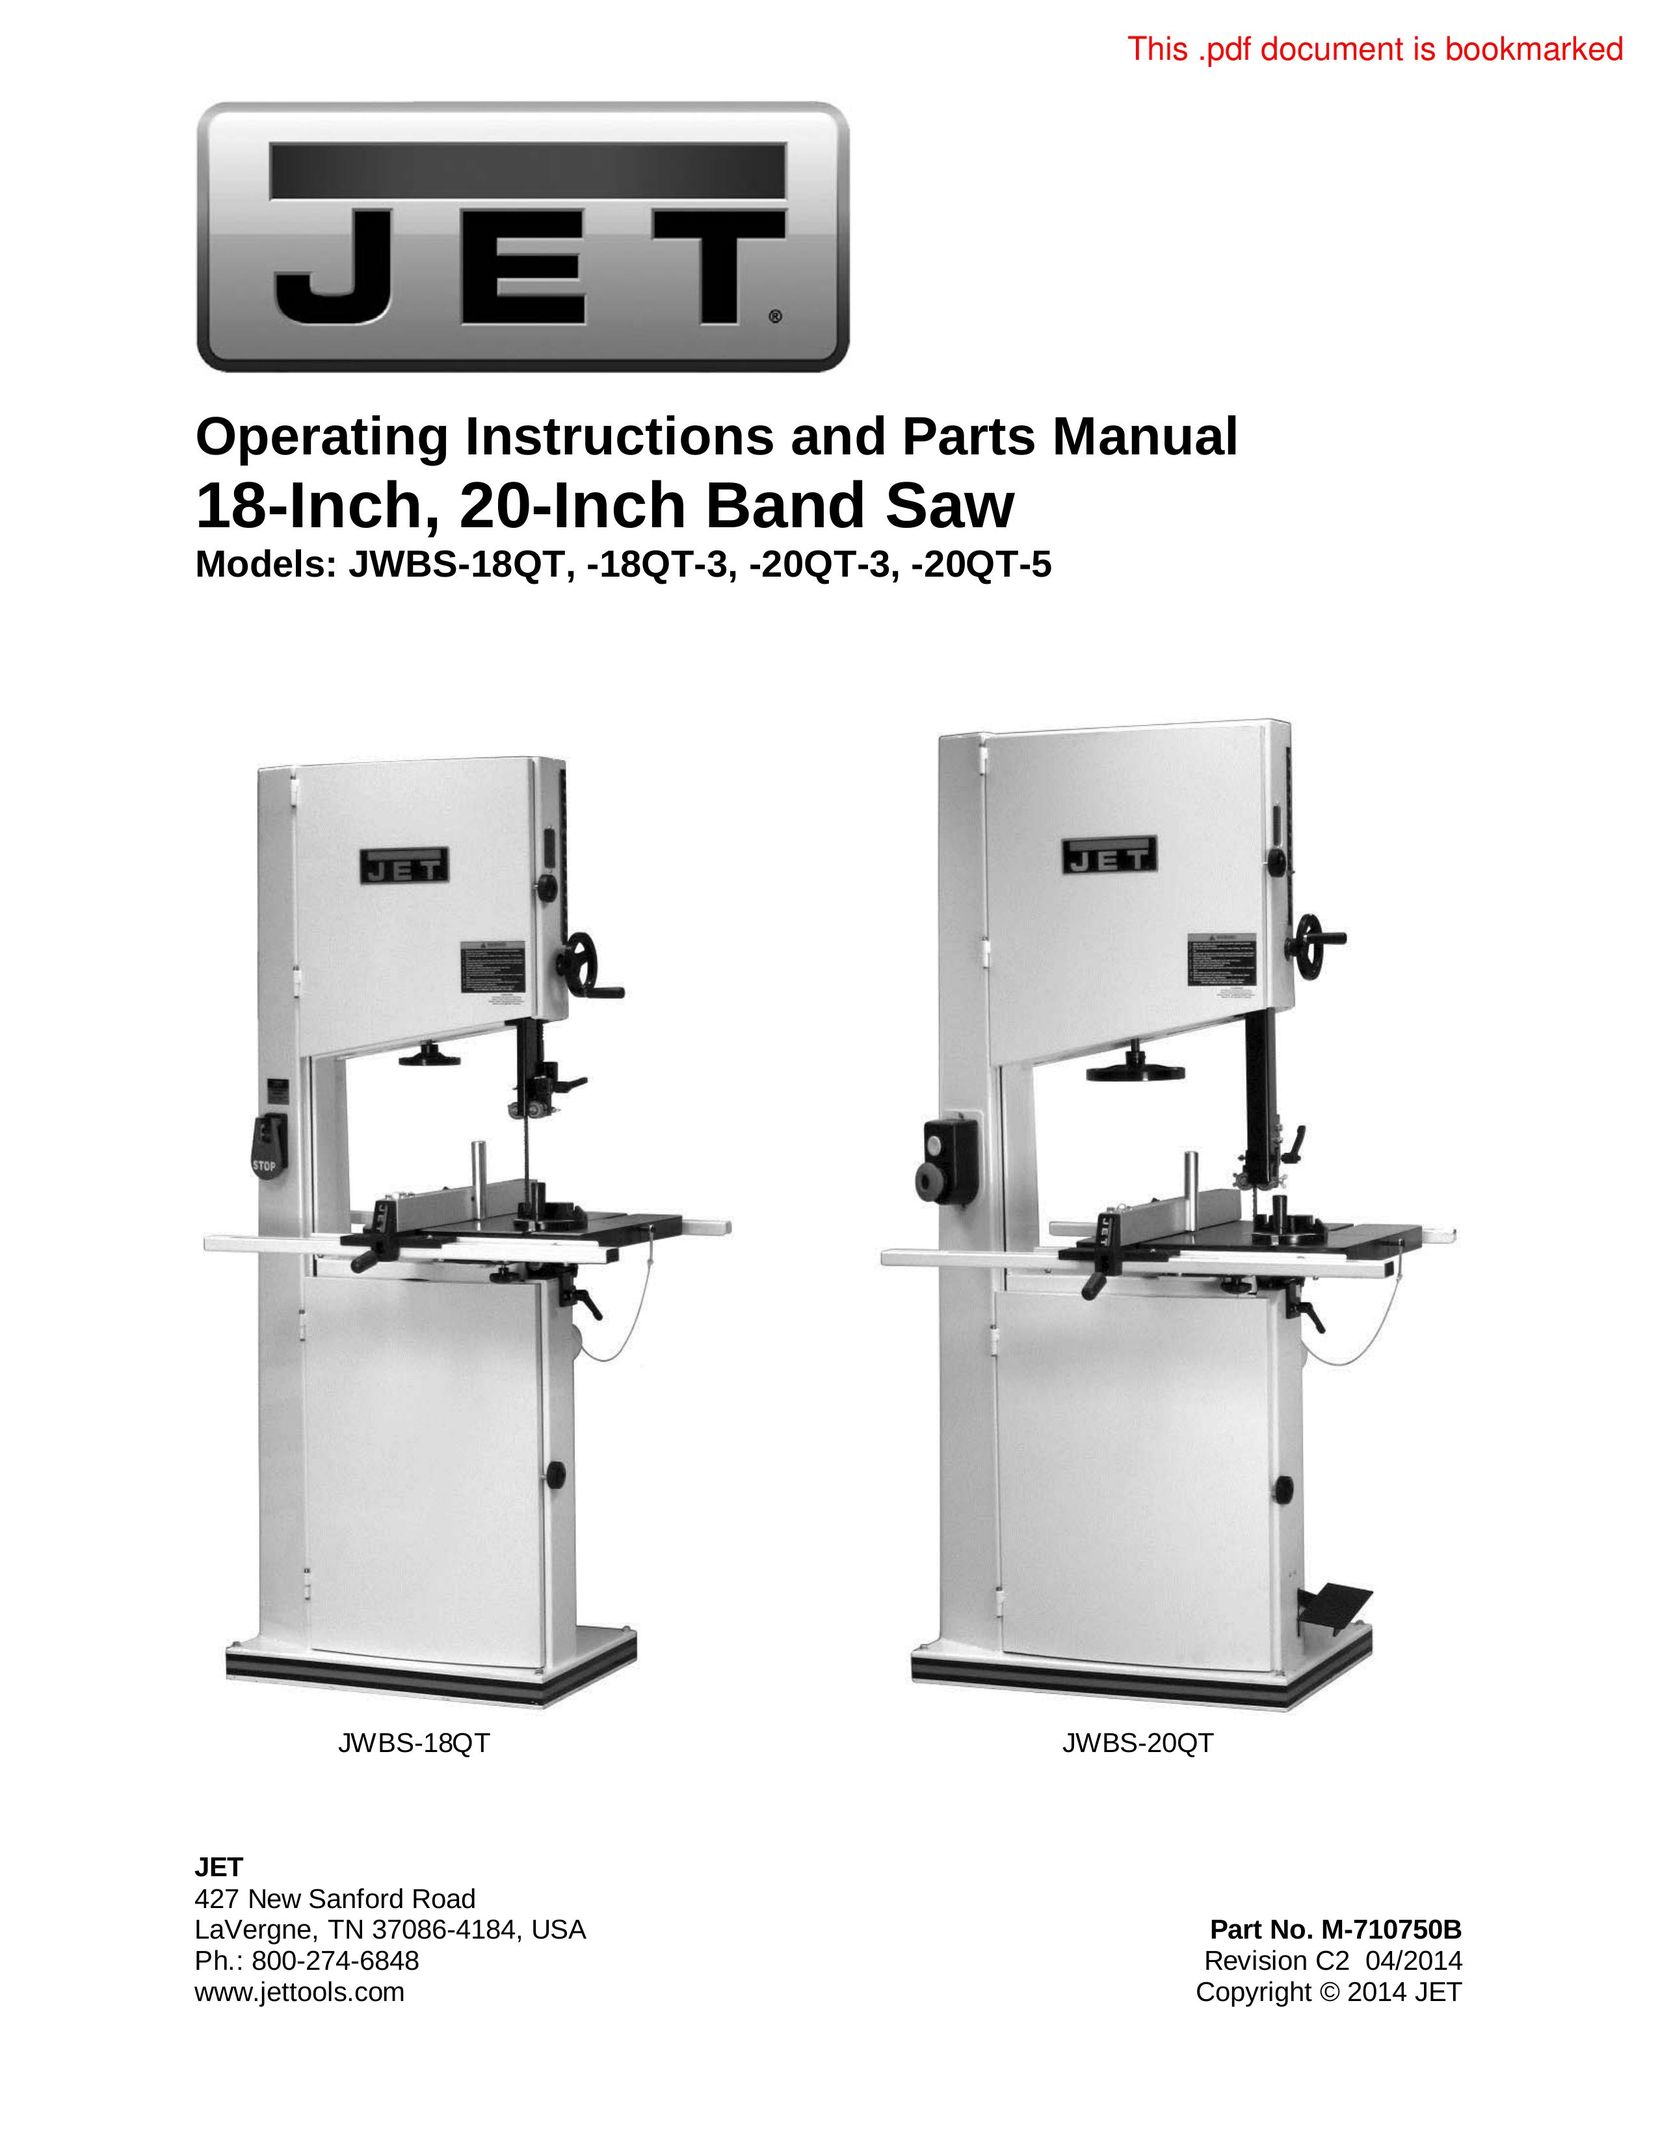 Jet Tools -20QT-3 Saw User Manual